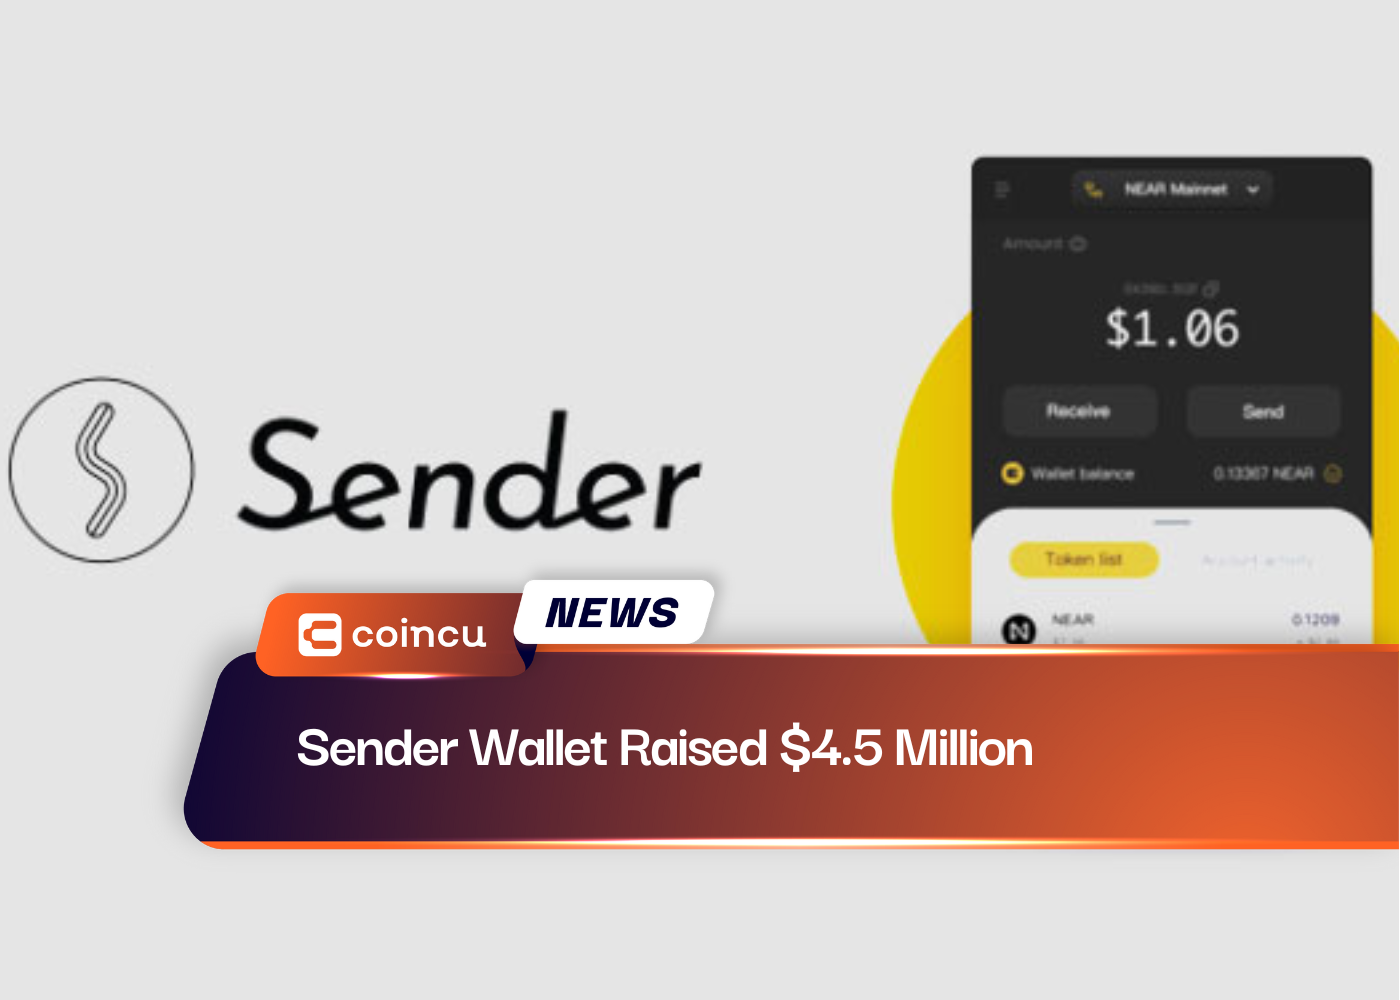 Sender Wallet Raised $4.5 Million